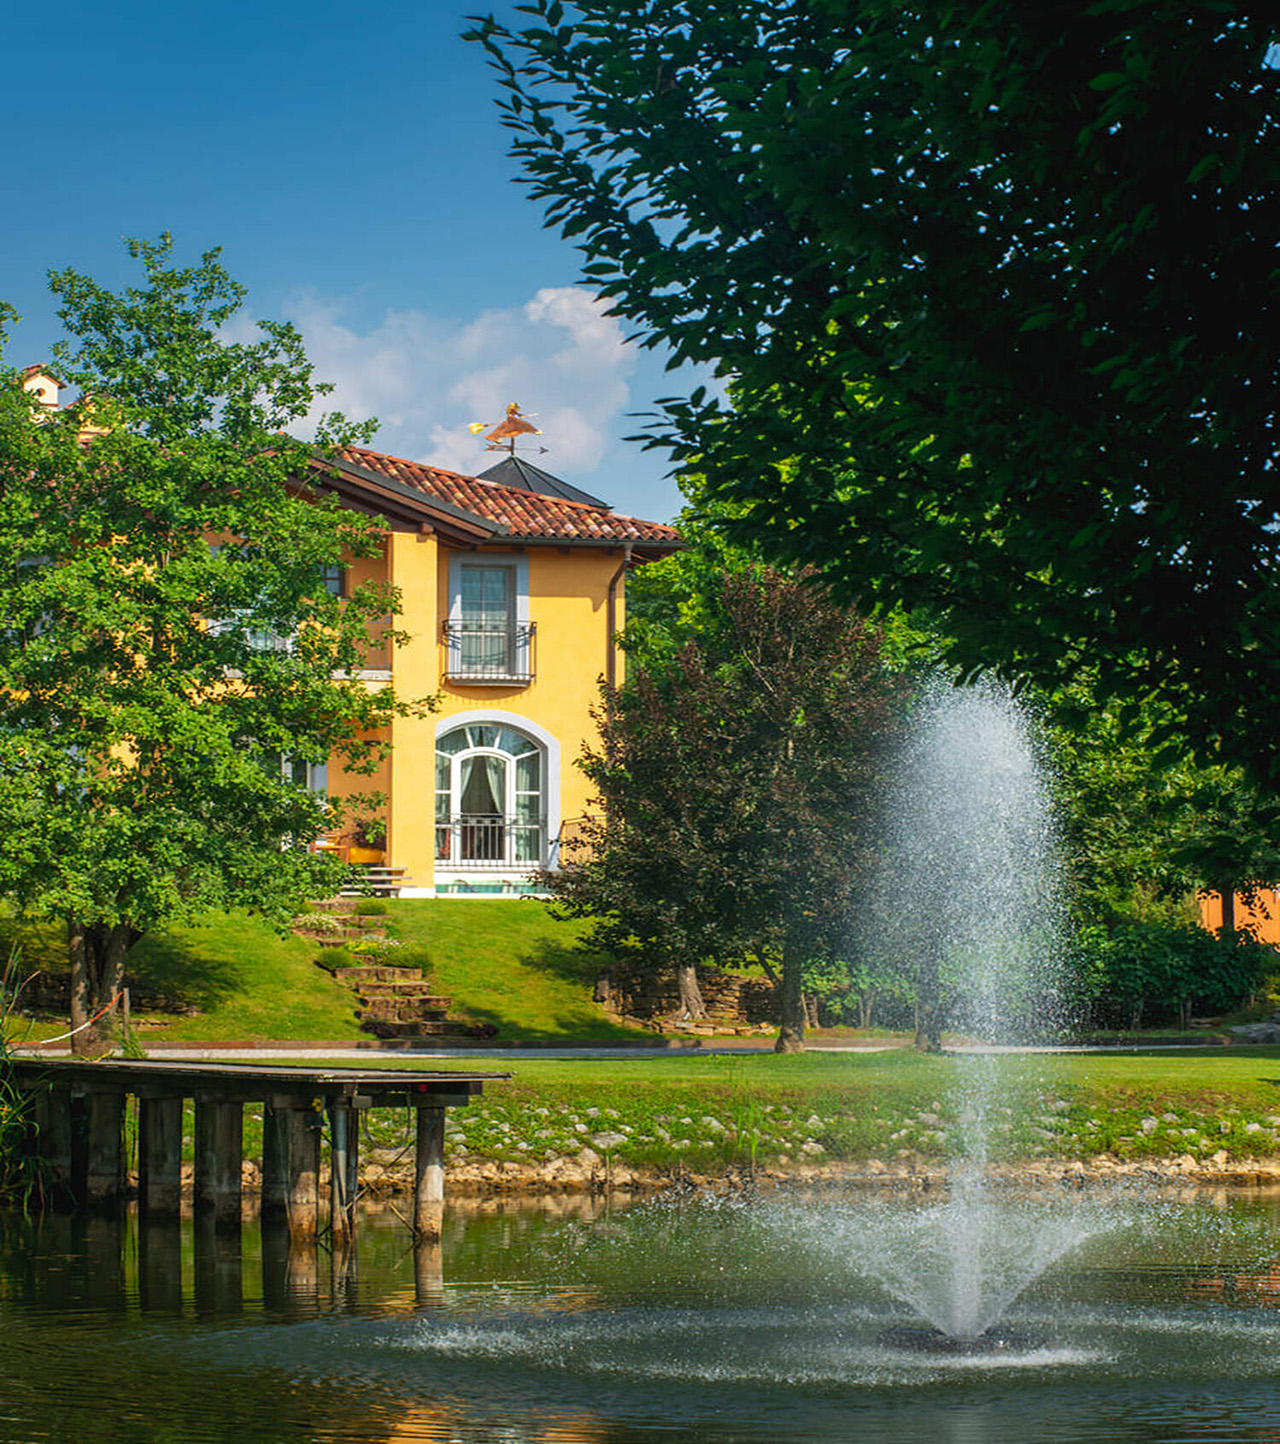 Lake with fountain outside a vibrant yellow Italian villa.